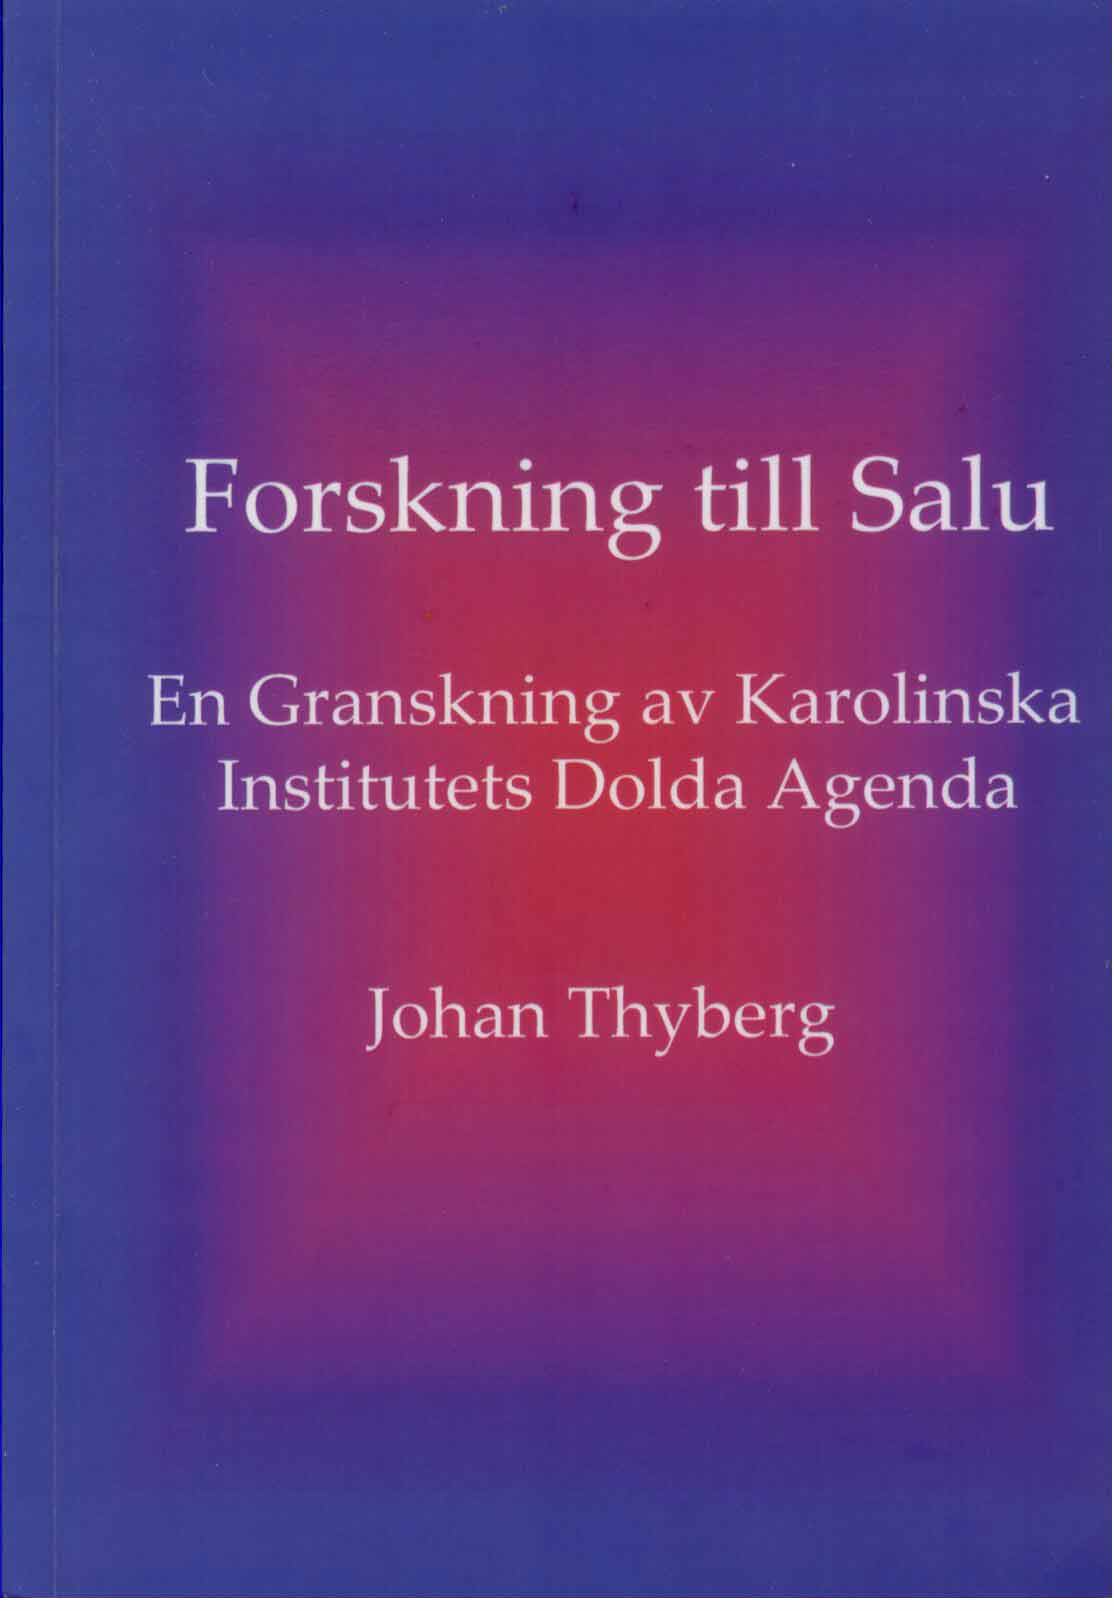 "Forskning till Salu" av professor Johan Thyberg